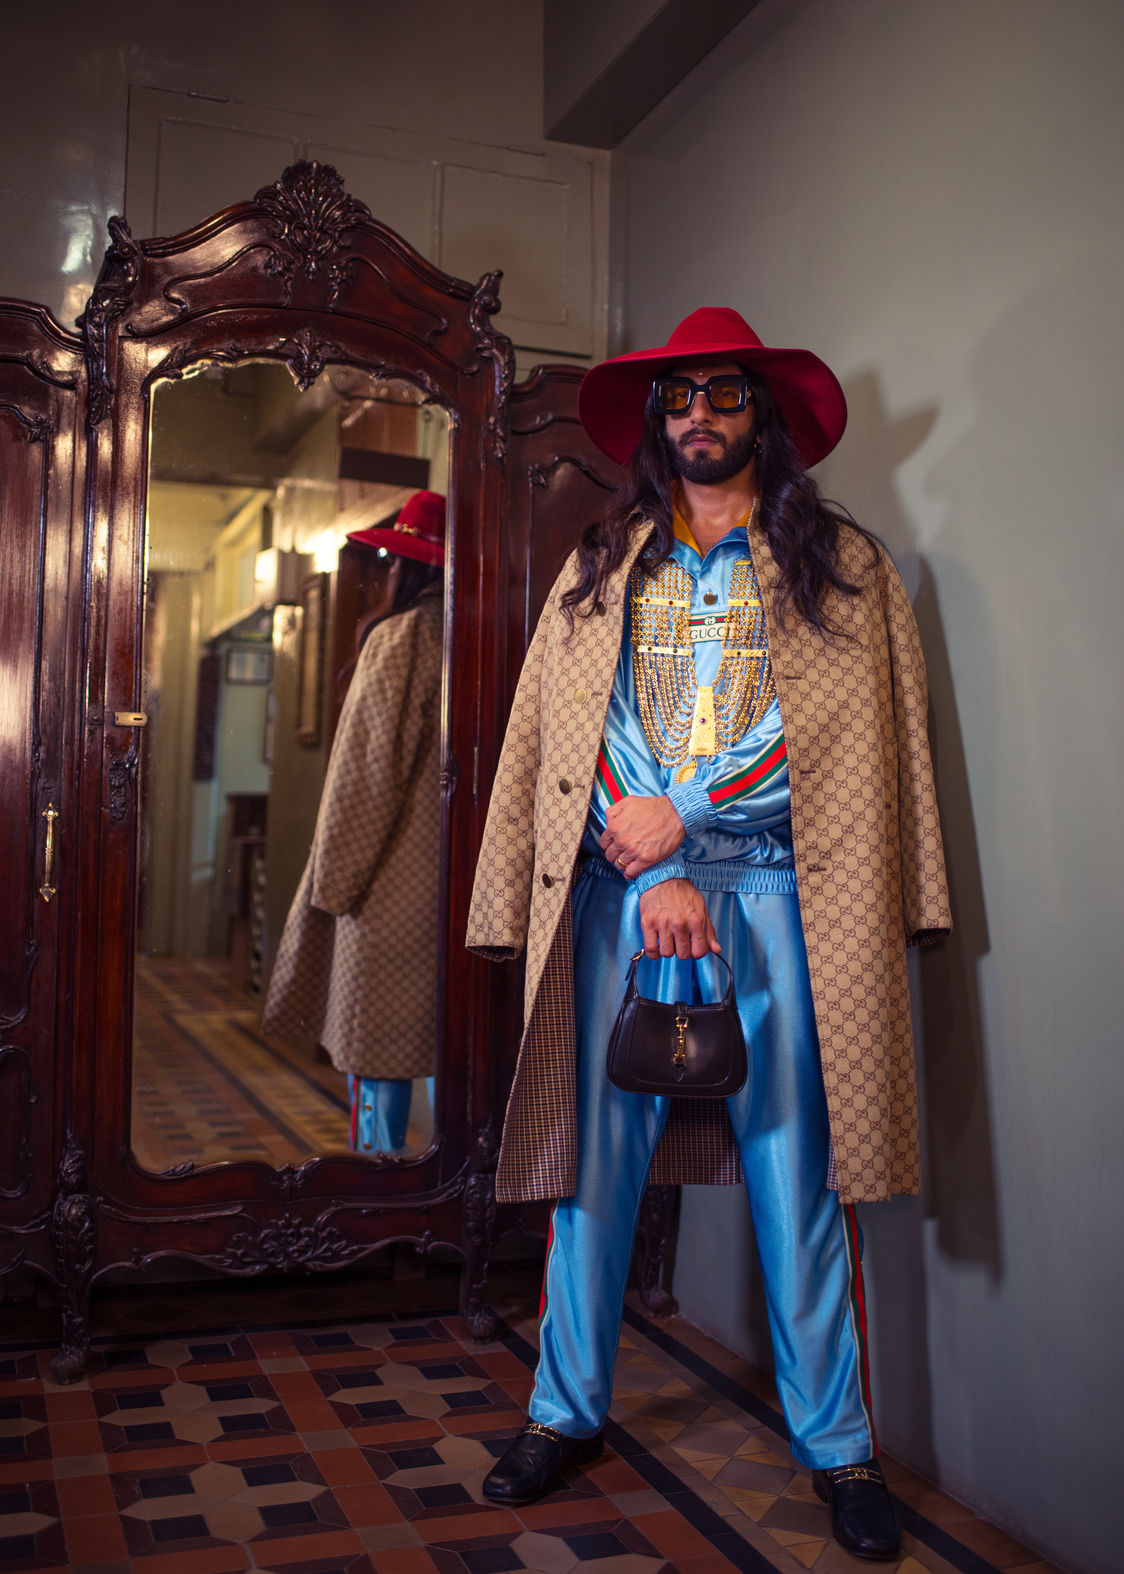 Ranveer Singh dresses like Alessandro Michele in this Gucci look